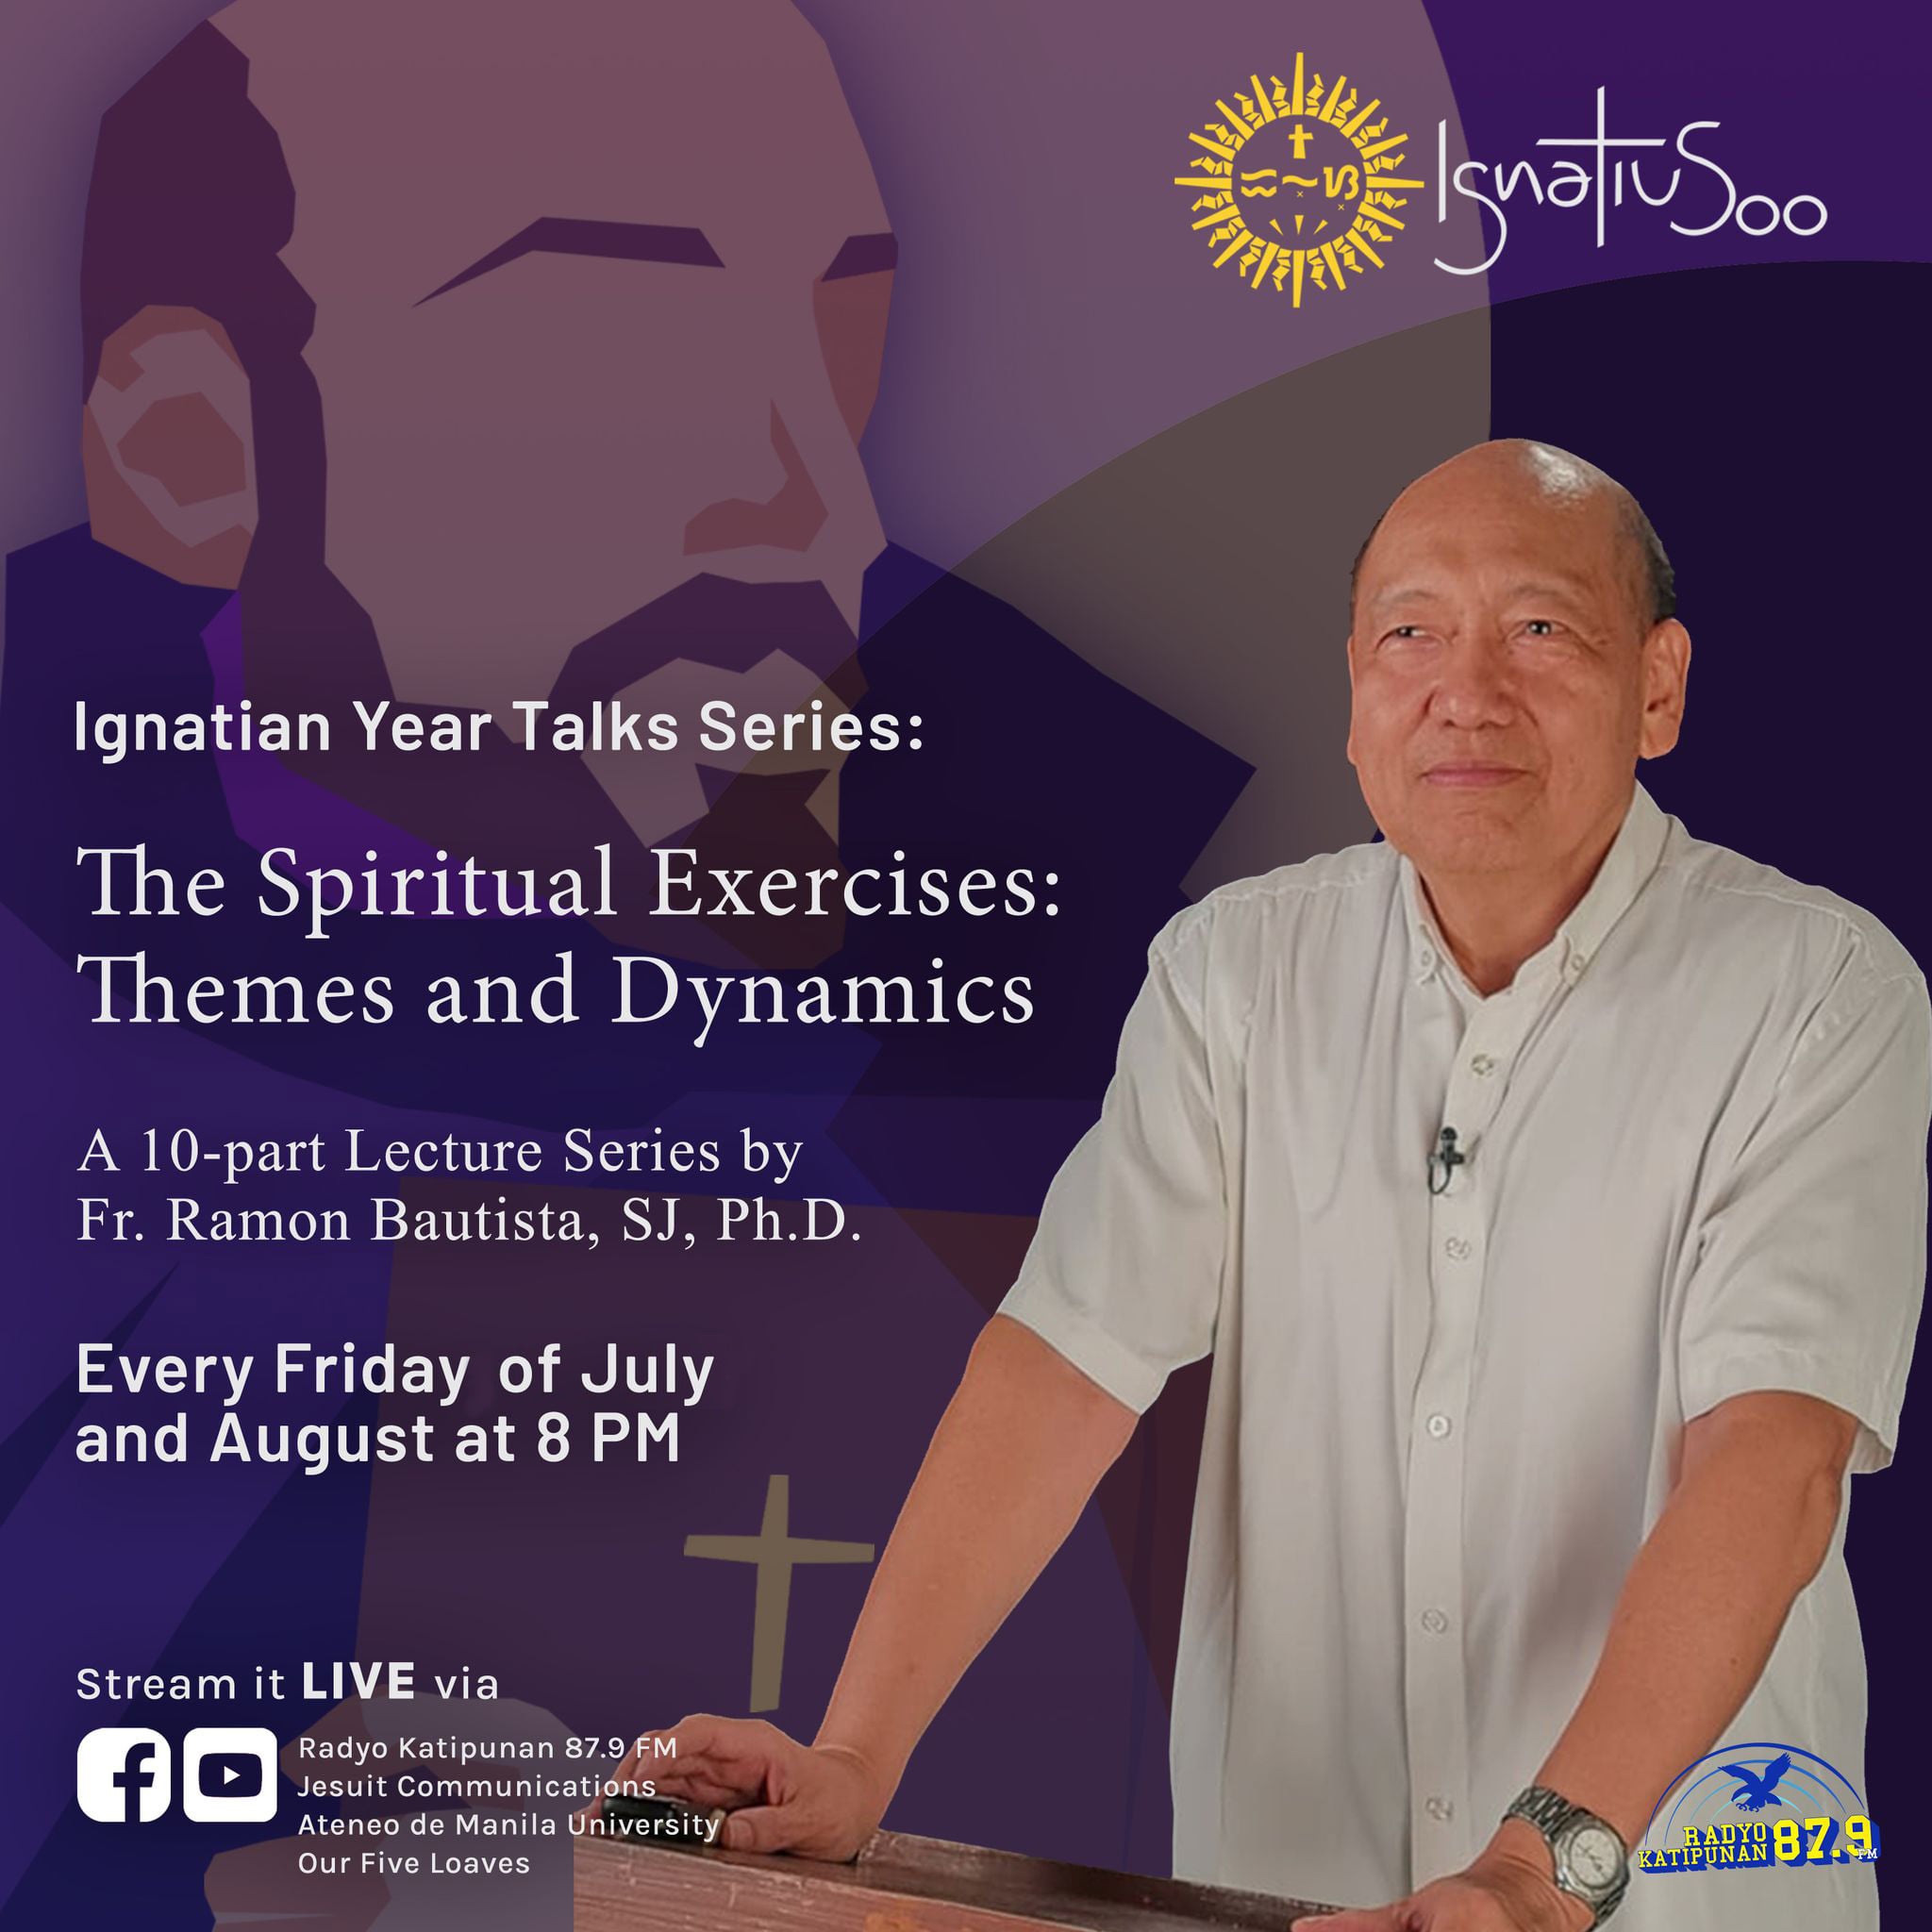 The Spiritual Exercises: Themes and Dynamics (Episode IV) — ‘The Spiritual Exercises as a School of Conversion’ with Fr. Ramon Bautista, SJ